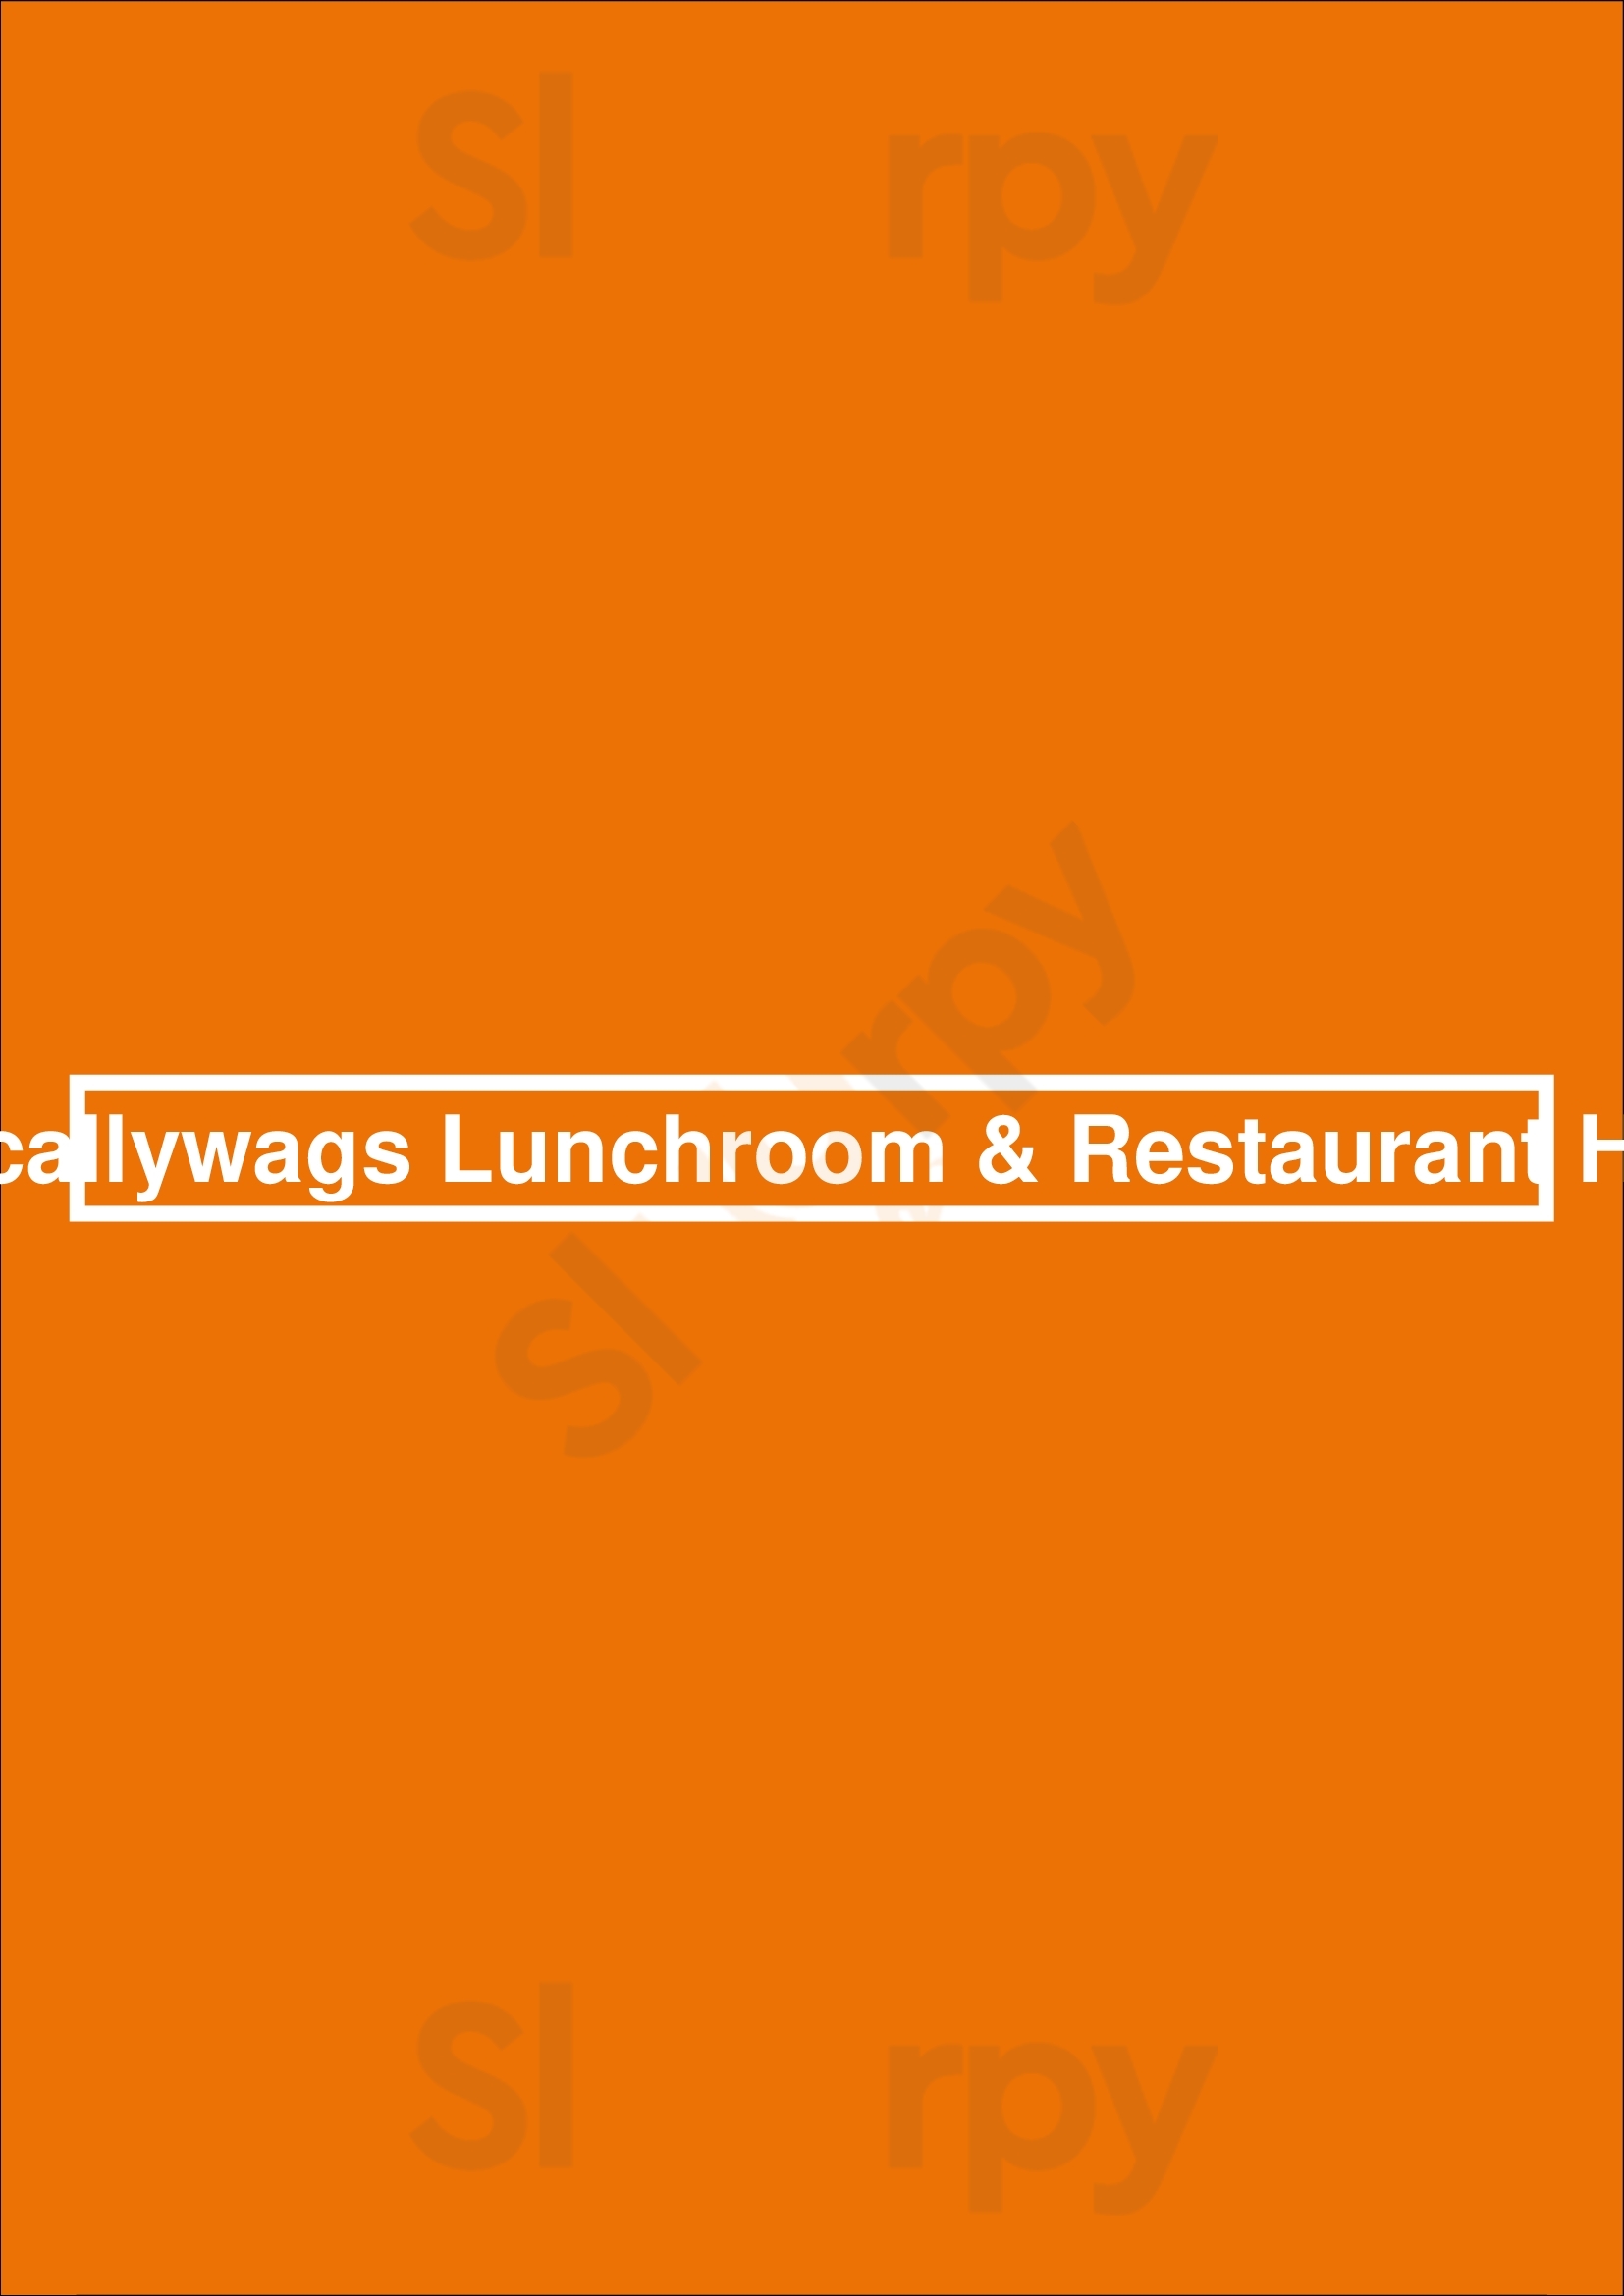 Scallywags Lunchroom & Restaurant Hb Den Haag Menu - 1